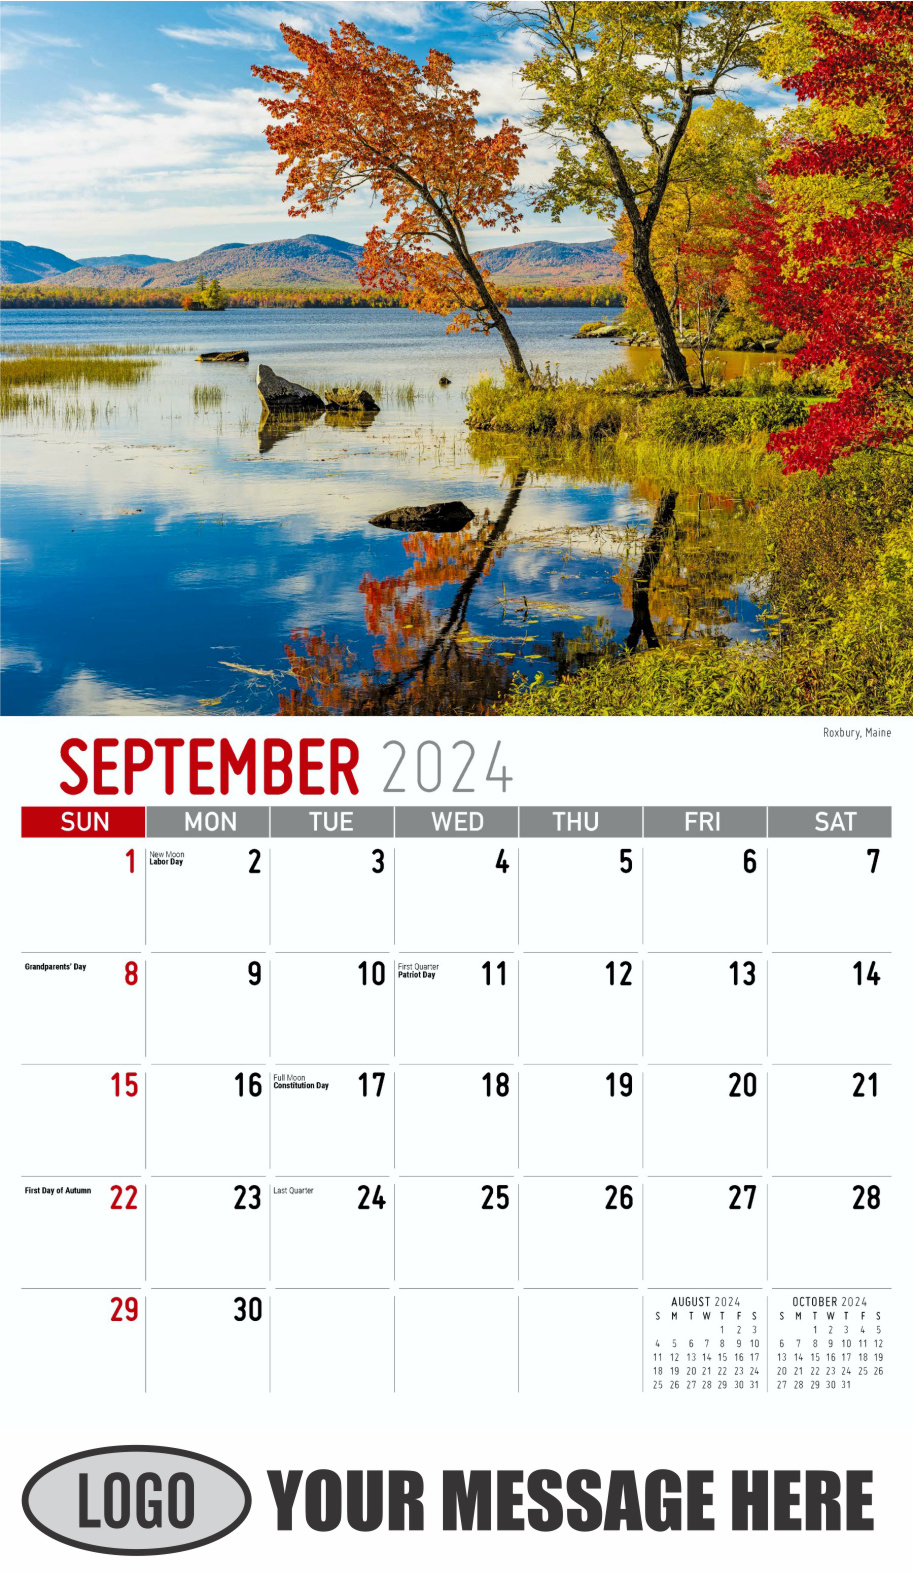 Scenes of New England 2024 Business Advertising Wall Calendar - September